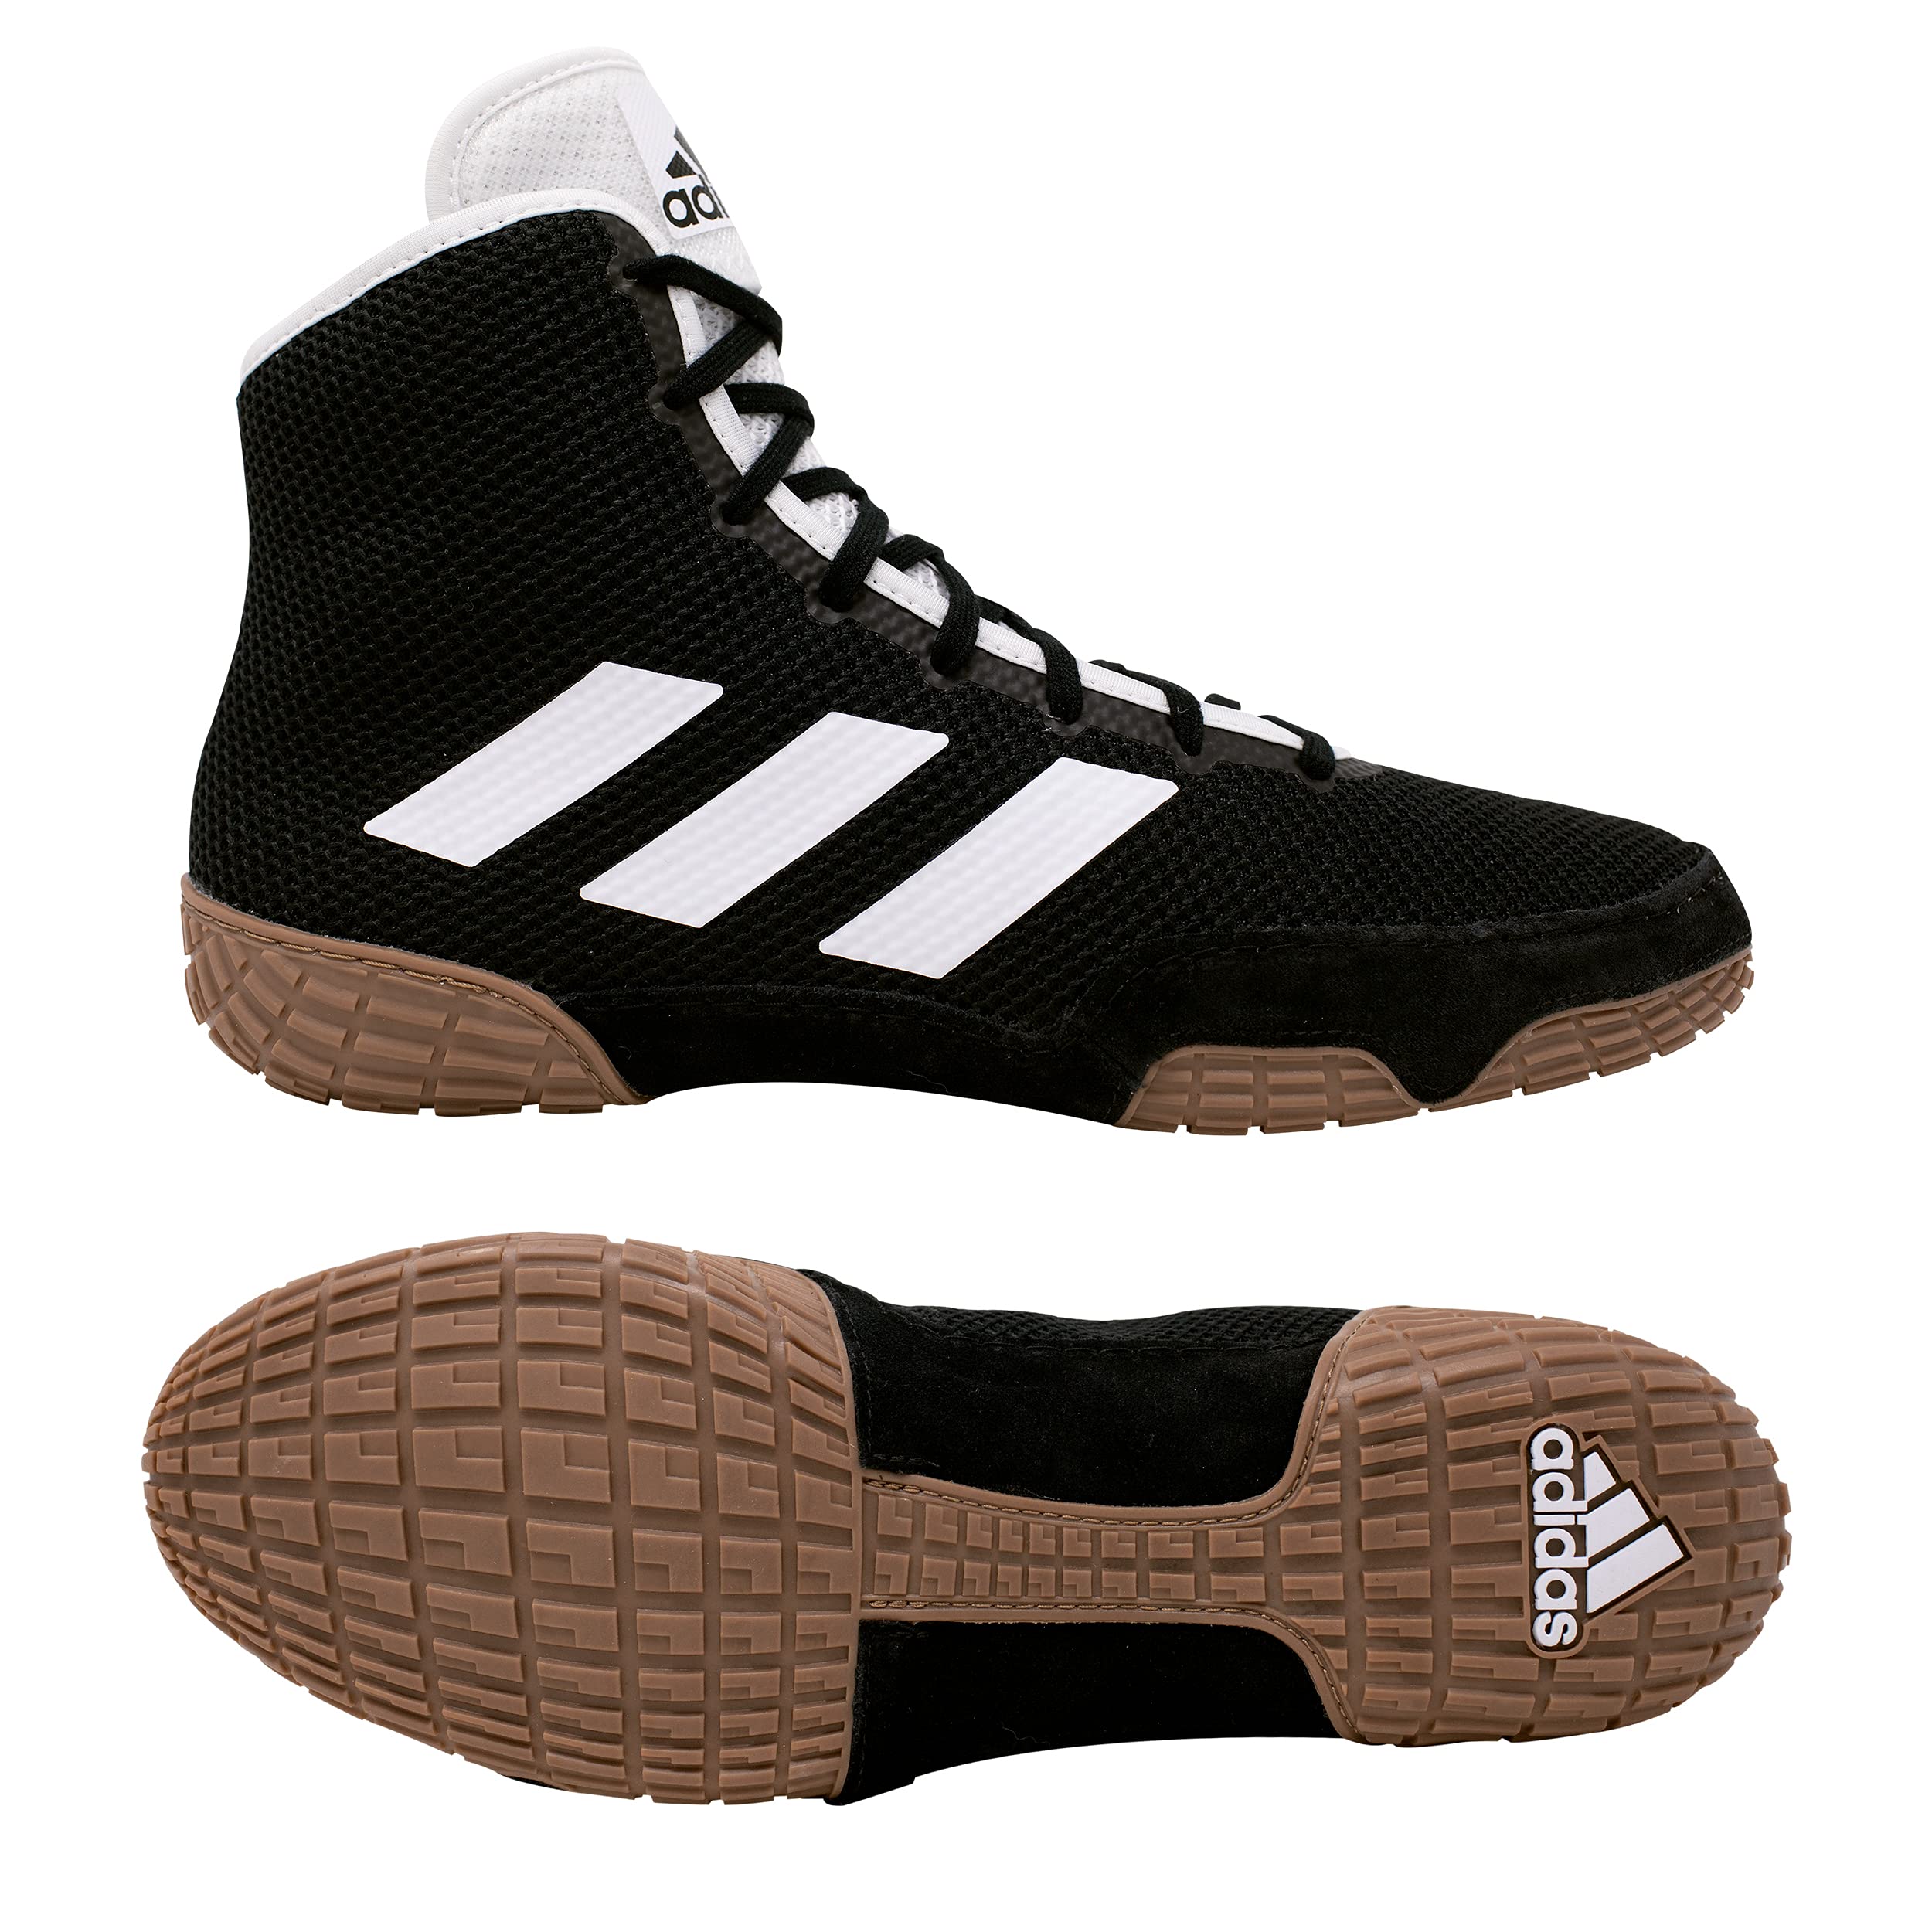 adidas Men's Tech Fall 2.0 Wrestling Shoe (Black/White, 14)